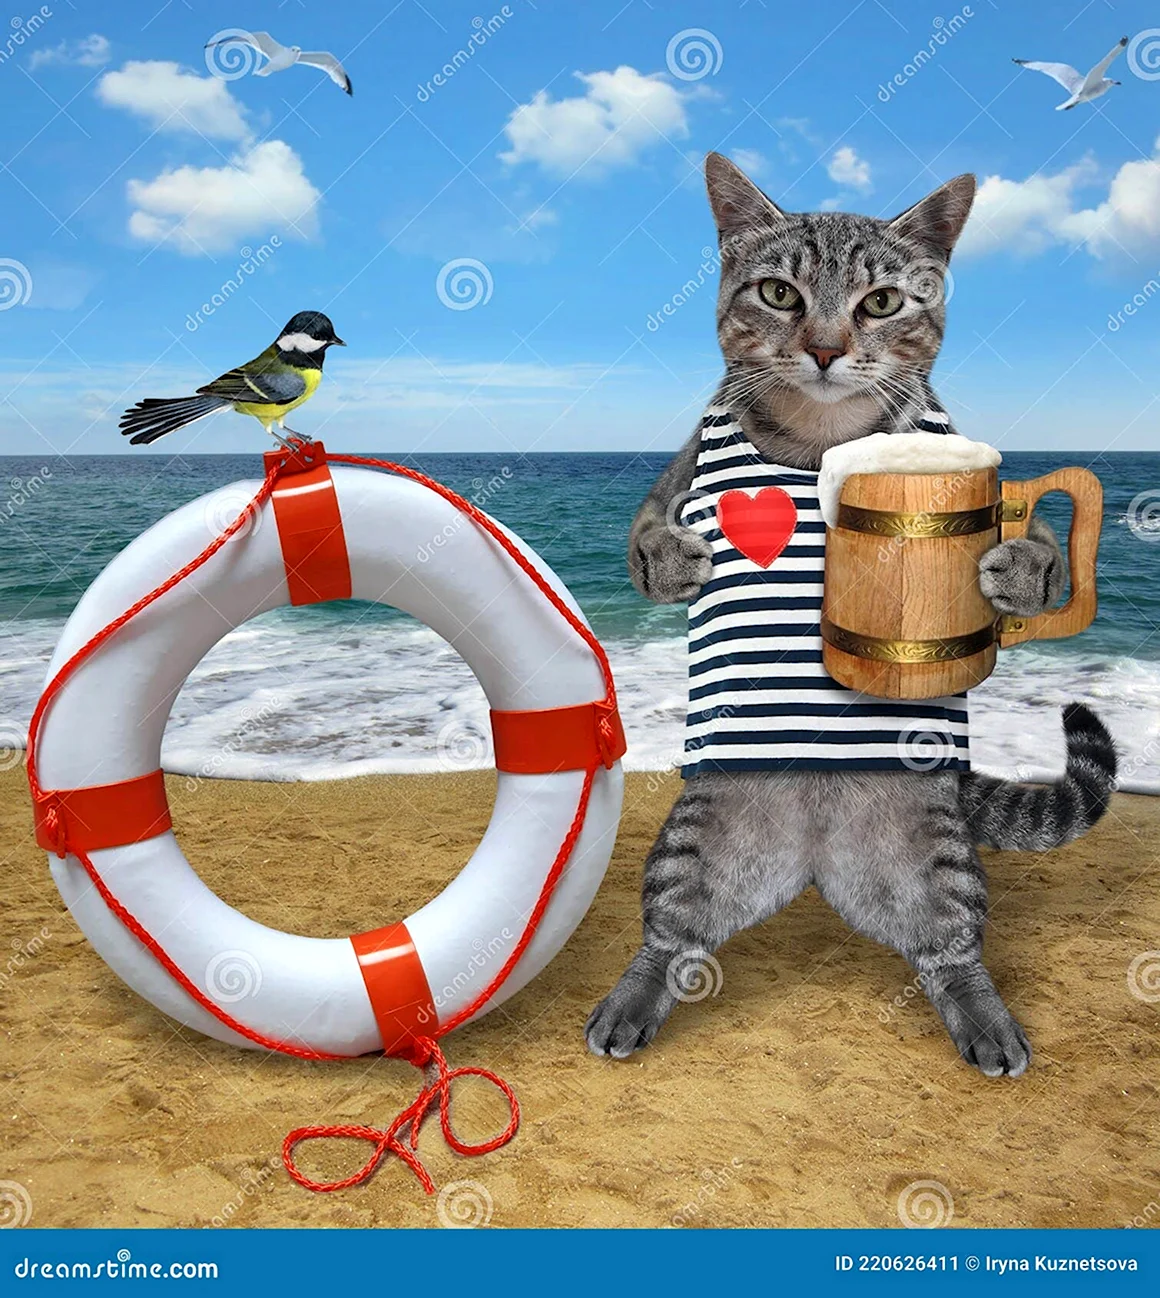 Игра про морячку с котом